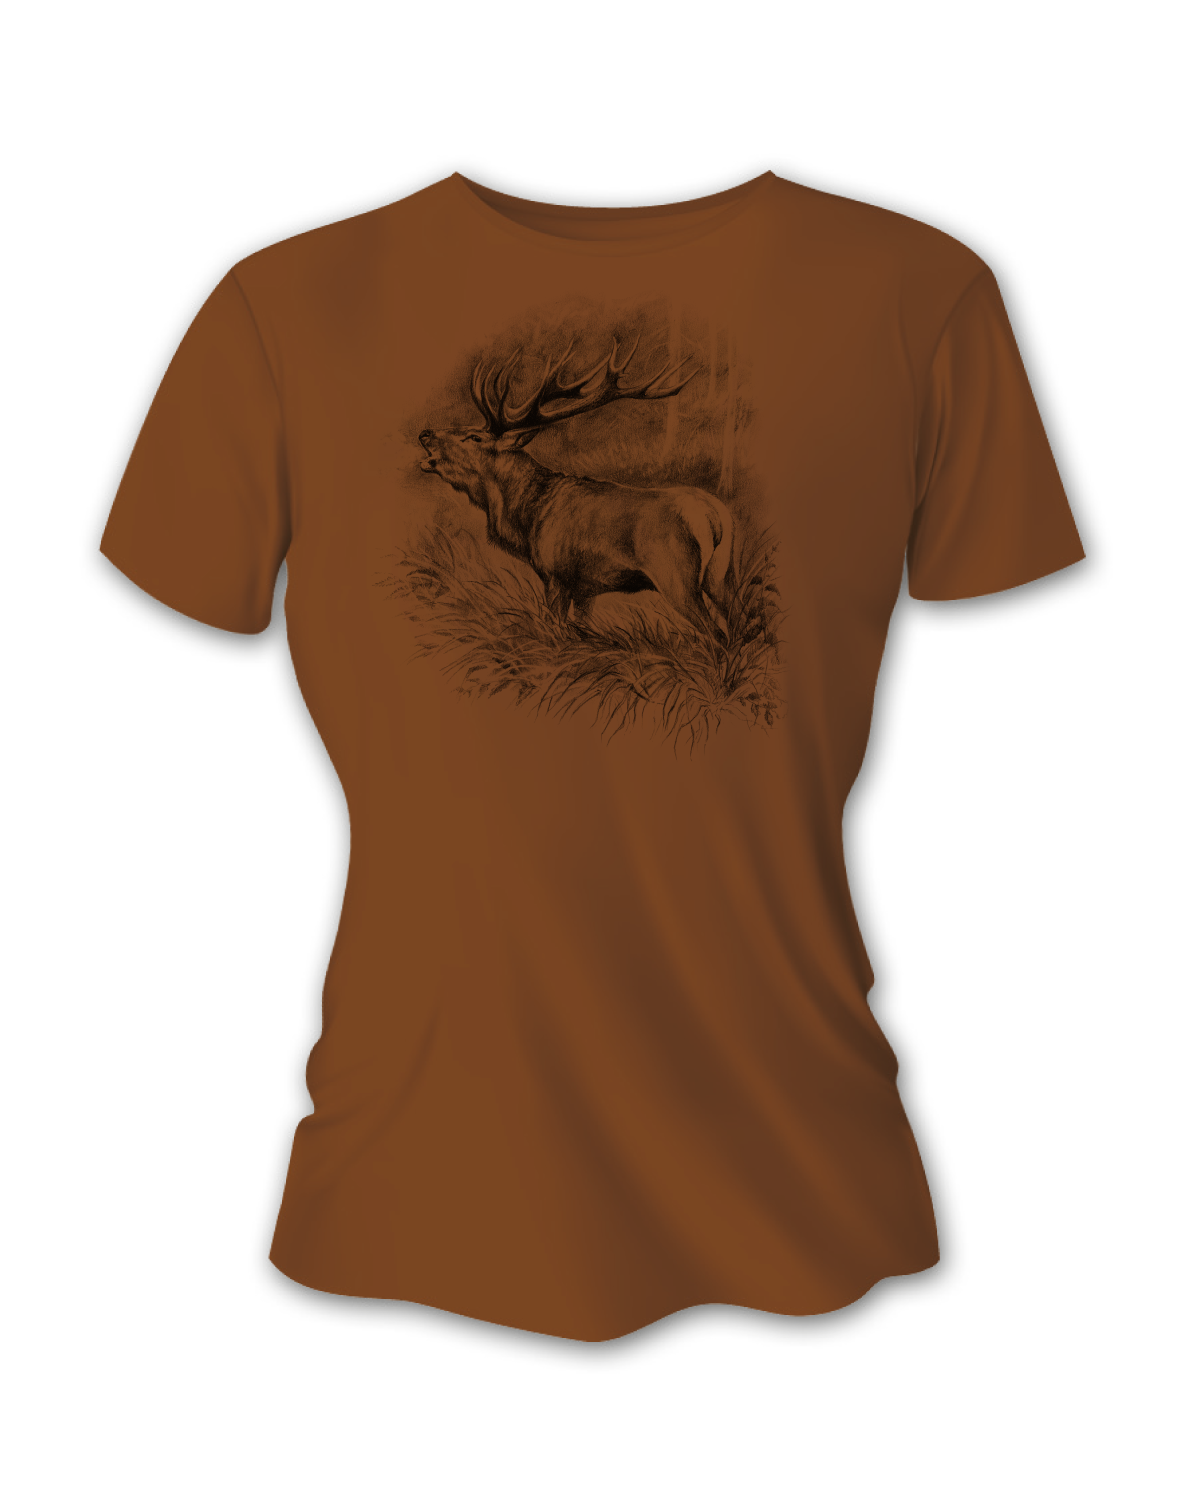 Dámske poľovnícke tričko TETRAO jeleň veľký - hnedé  M